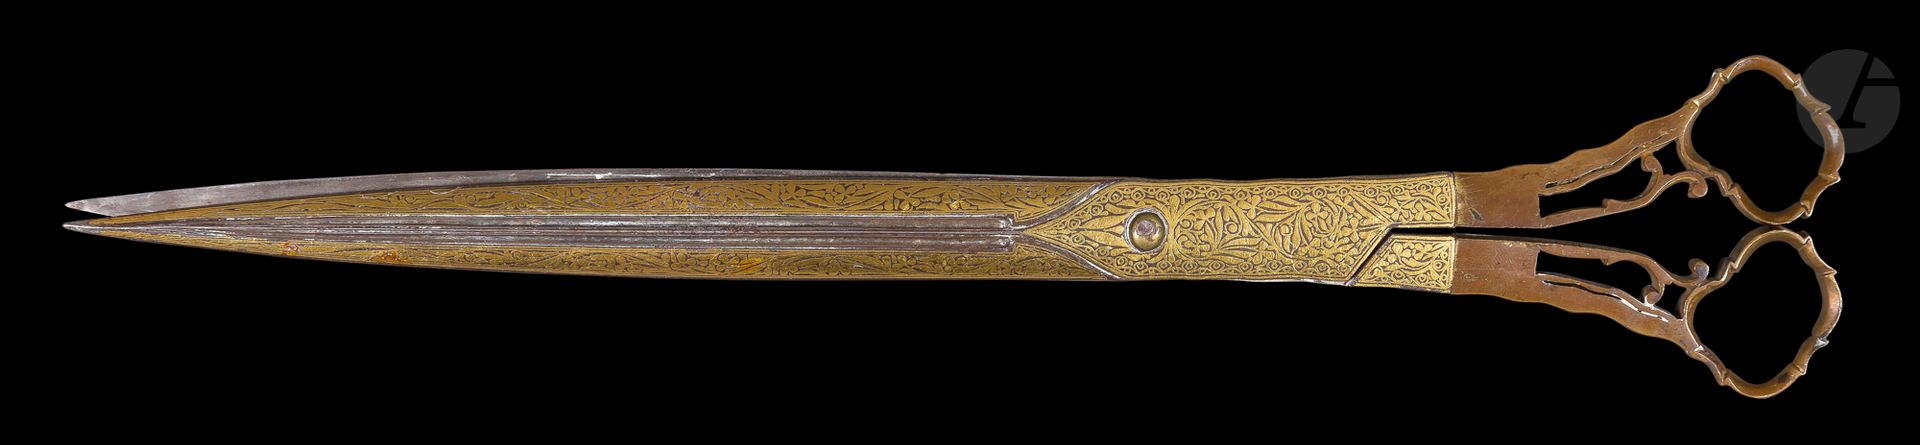 Null Pair of calligrapher's scissors, Ottoman Turkey, 19th century
Slightly curv&hellip;